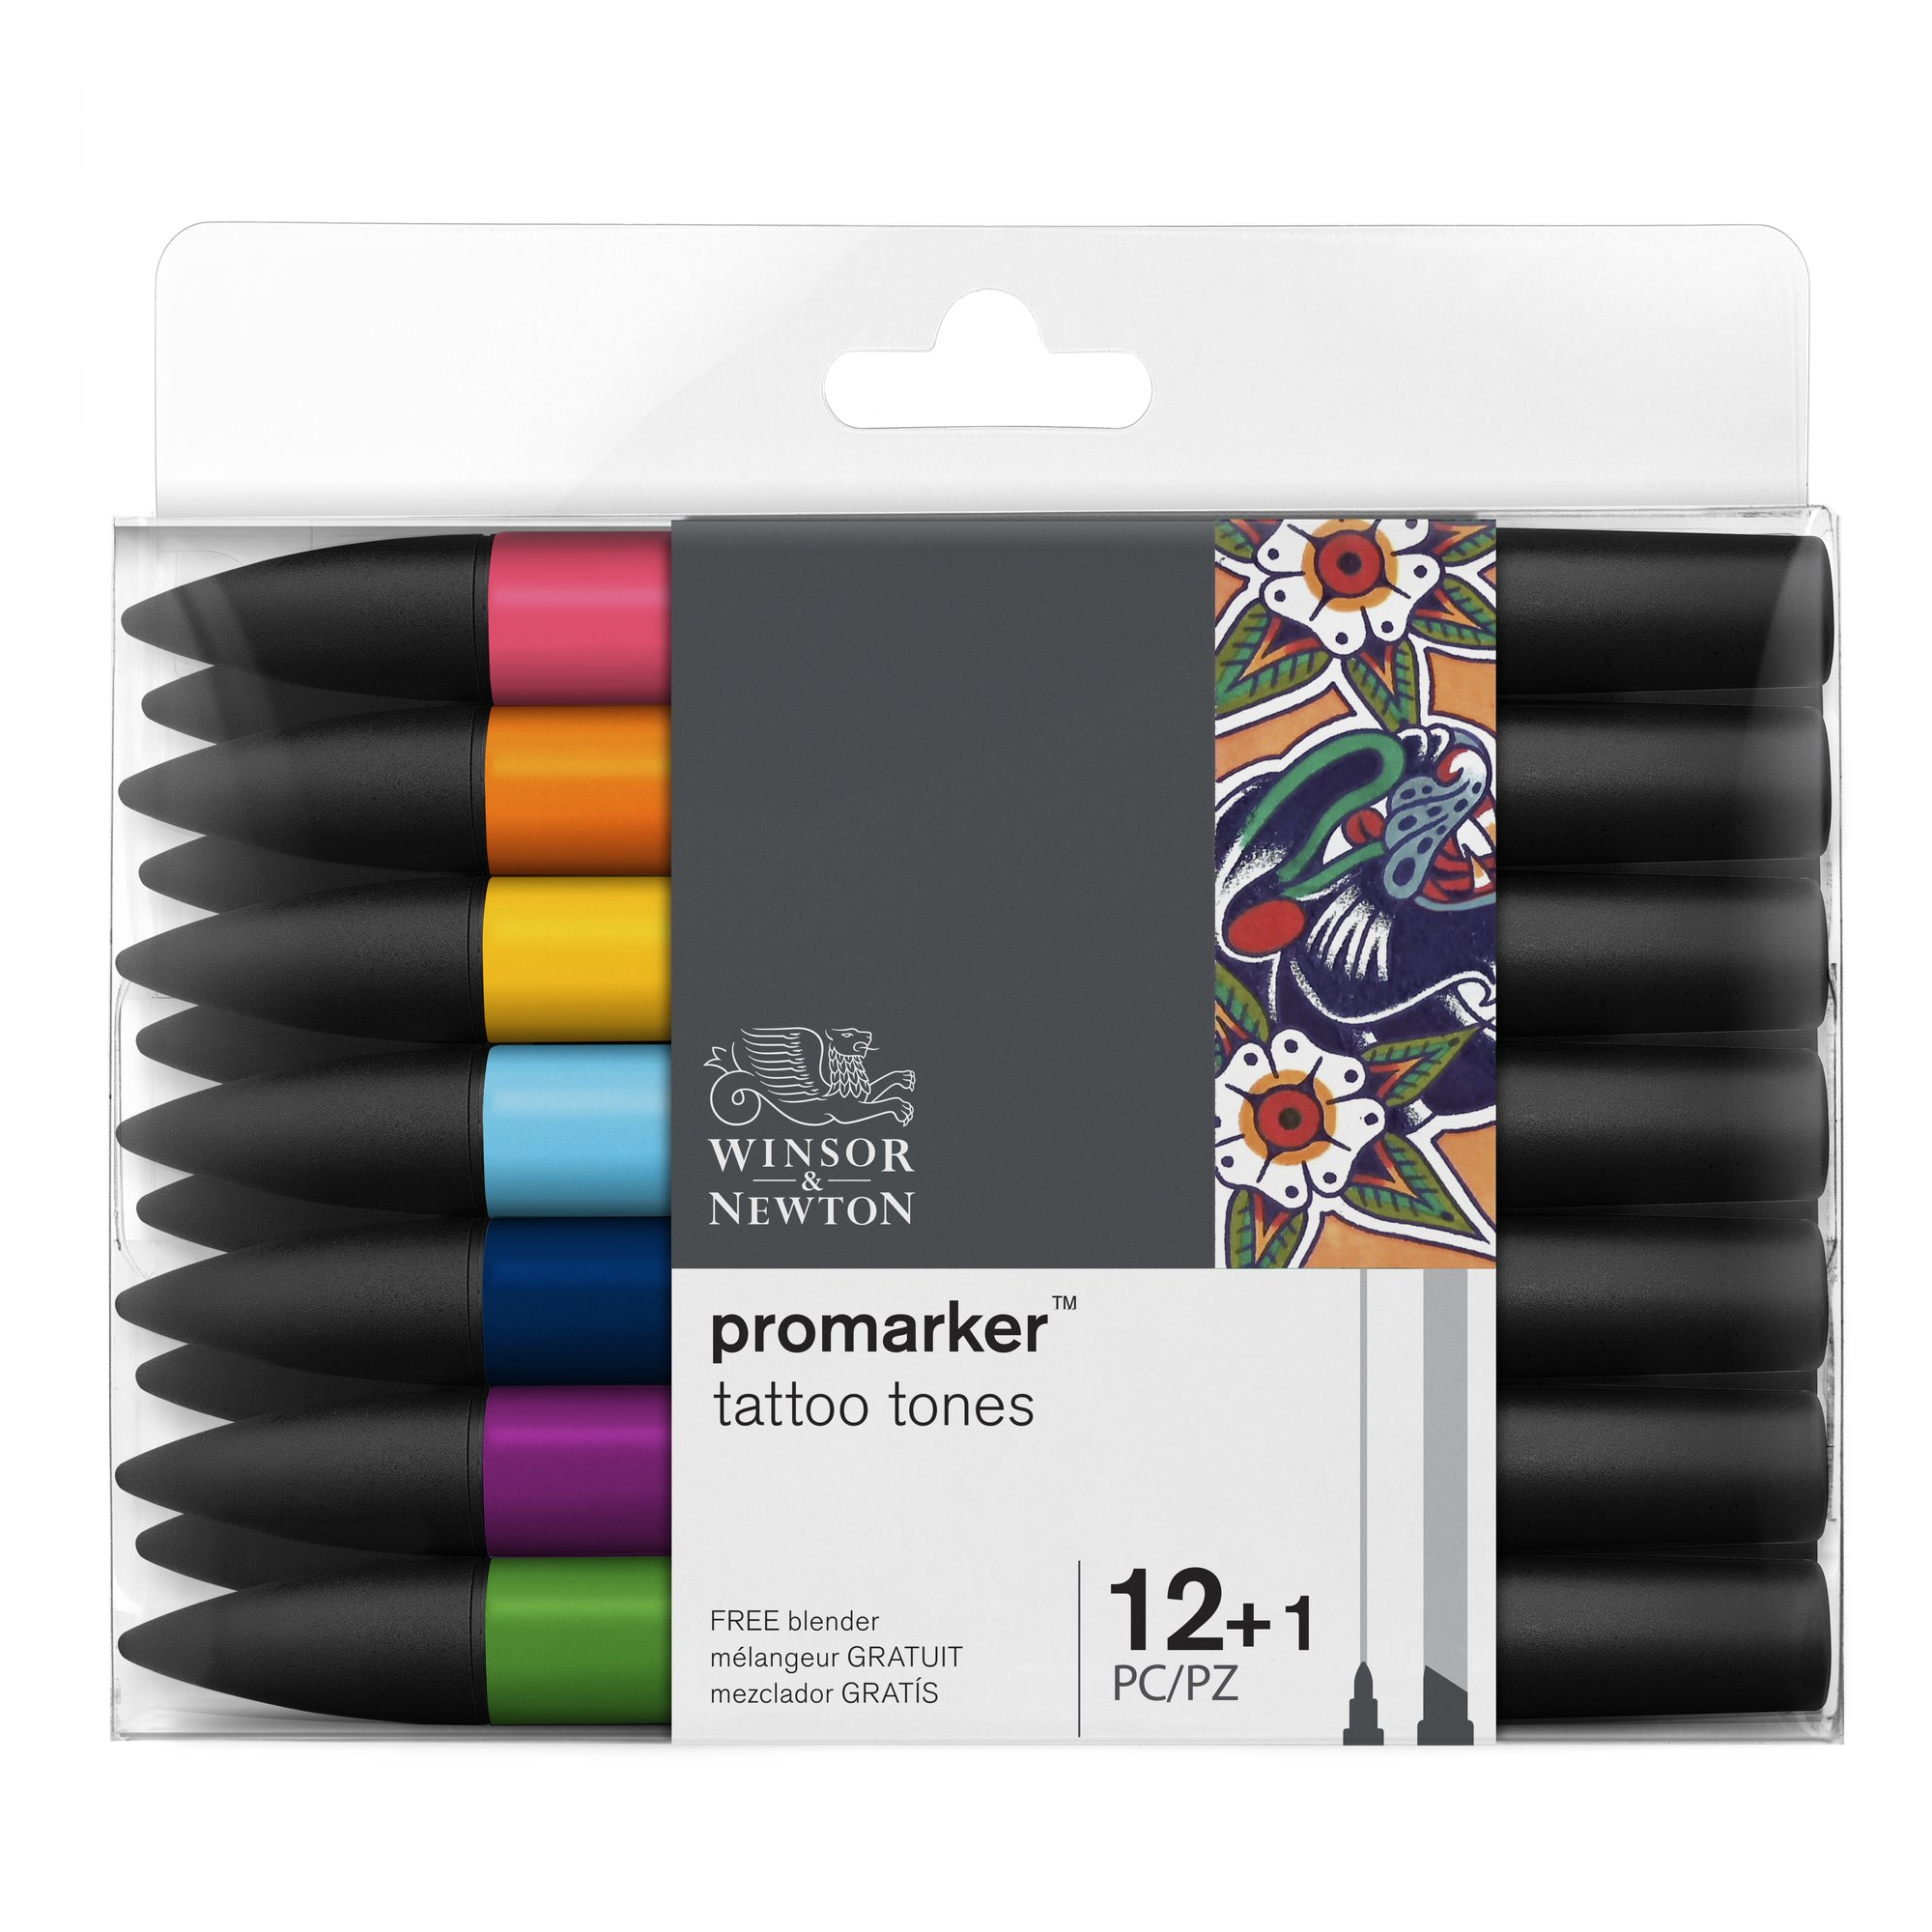 Winsor & Newton Promarker Graphic Drawing Pens 12+1 Tattoo Tones